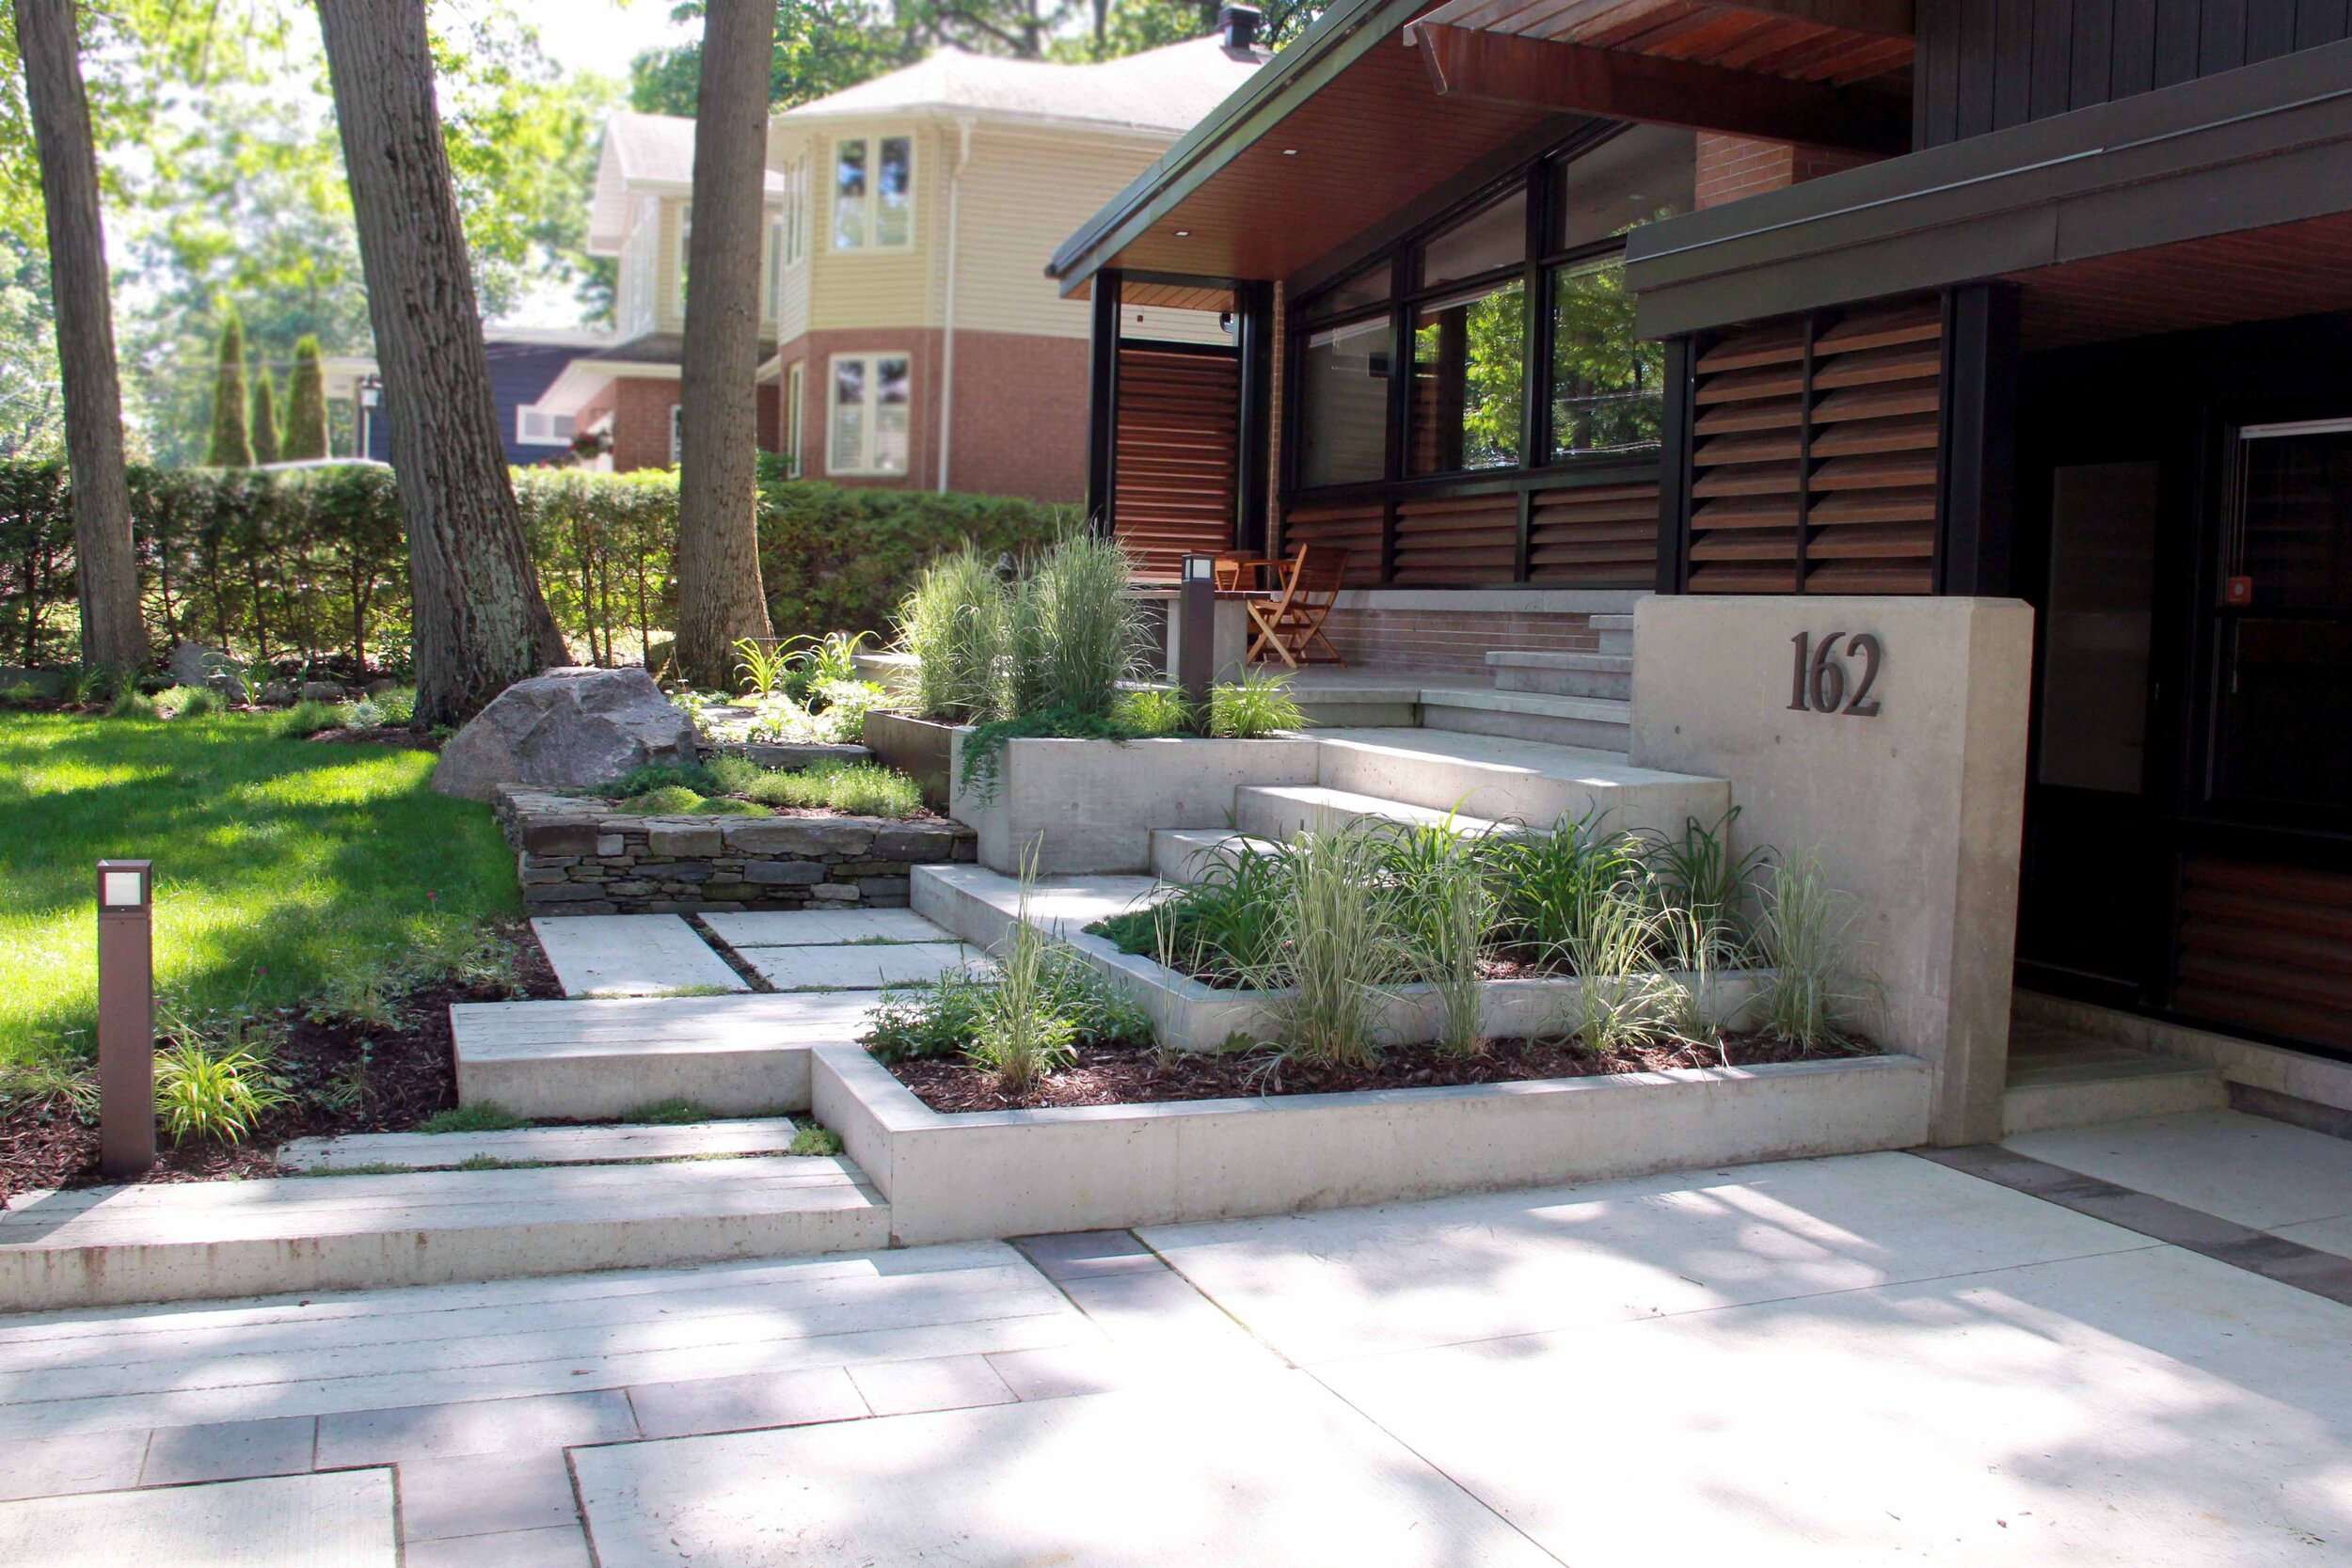 Poured concrete driveway- Mid Century Modern Home- Raised Garden Beds-front walk up- Ipe wood-Patio-Low maintenance garden-Landscape design.jpg